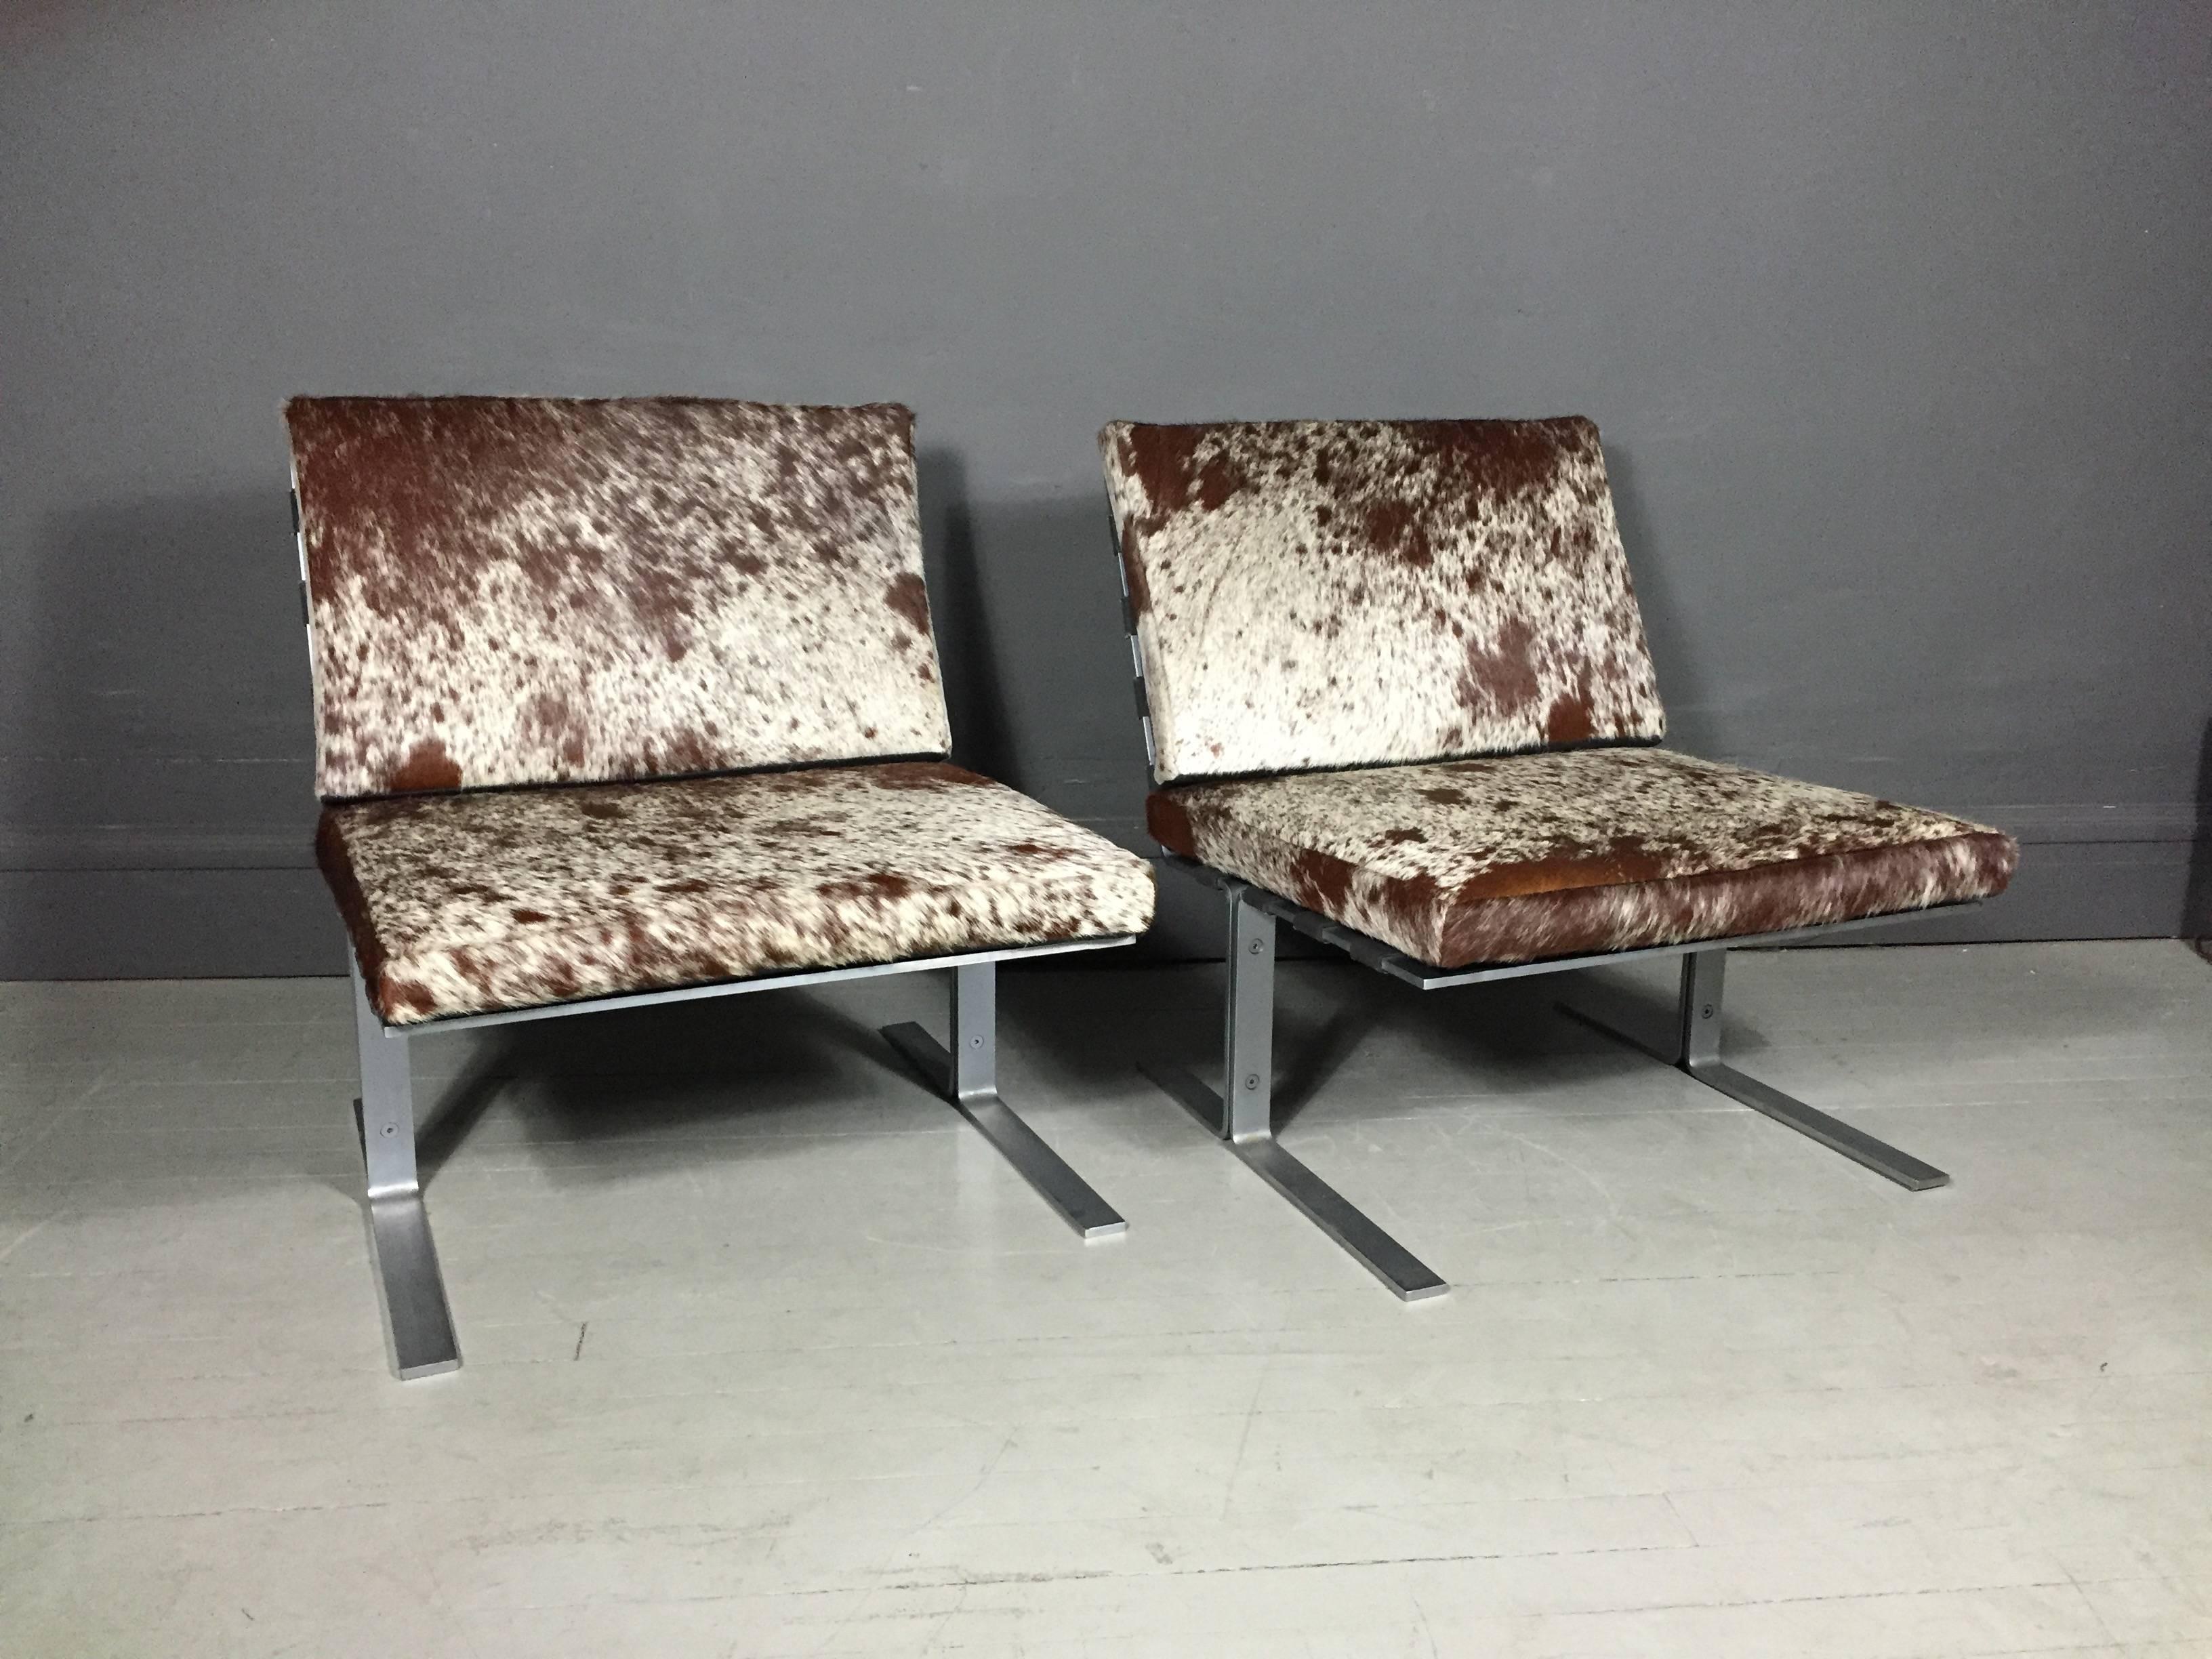 Late 20th Century American Modern Flat-Bar Steel Lounge Chairs, Brazilian Hide, 1970